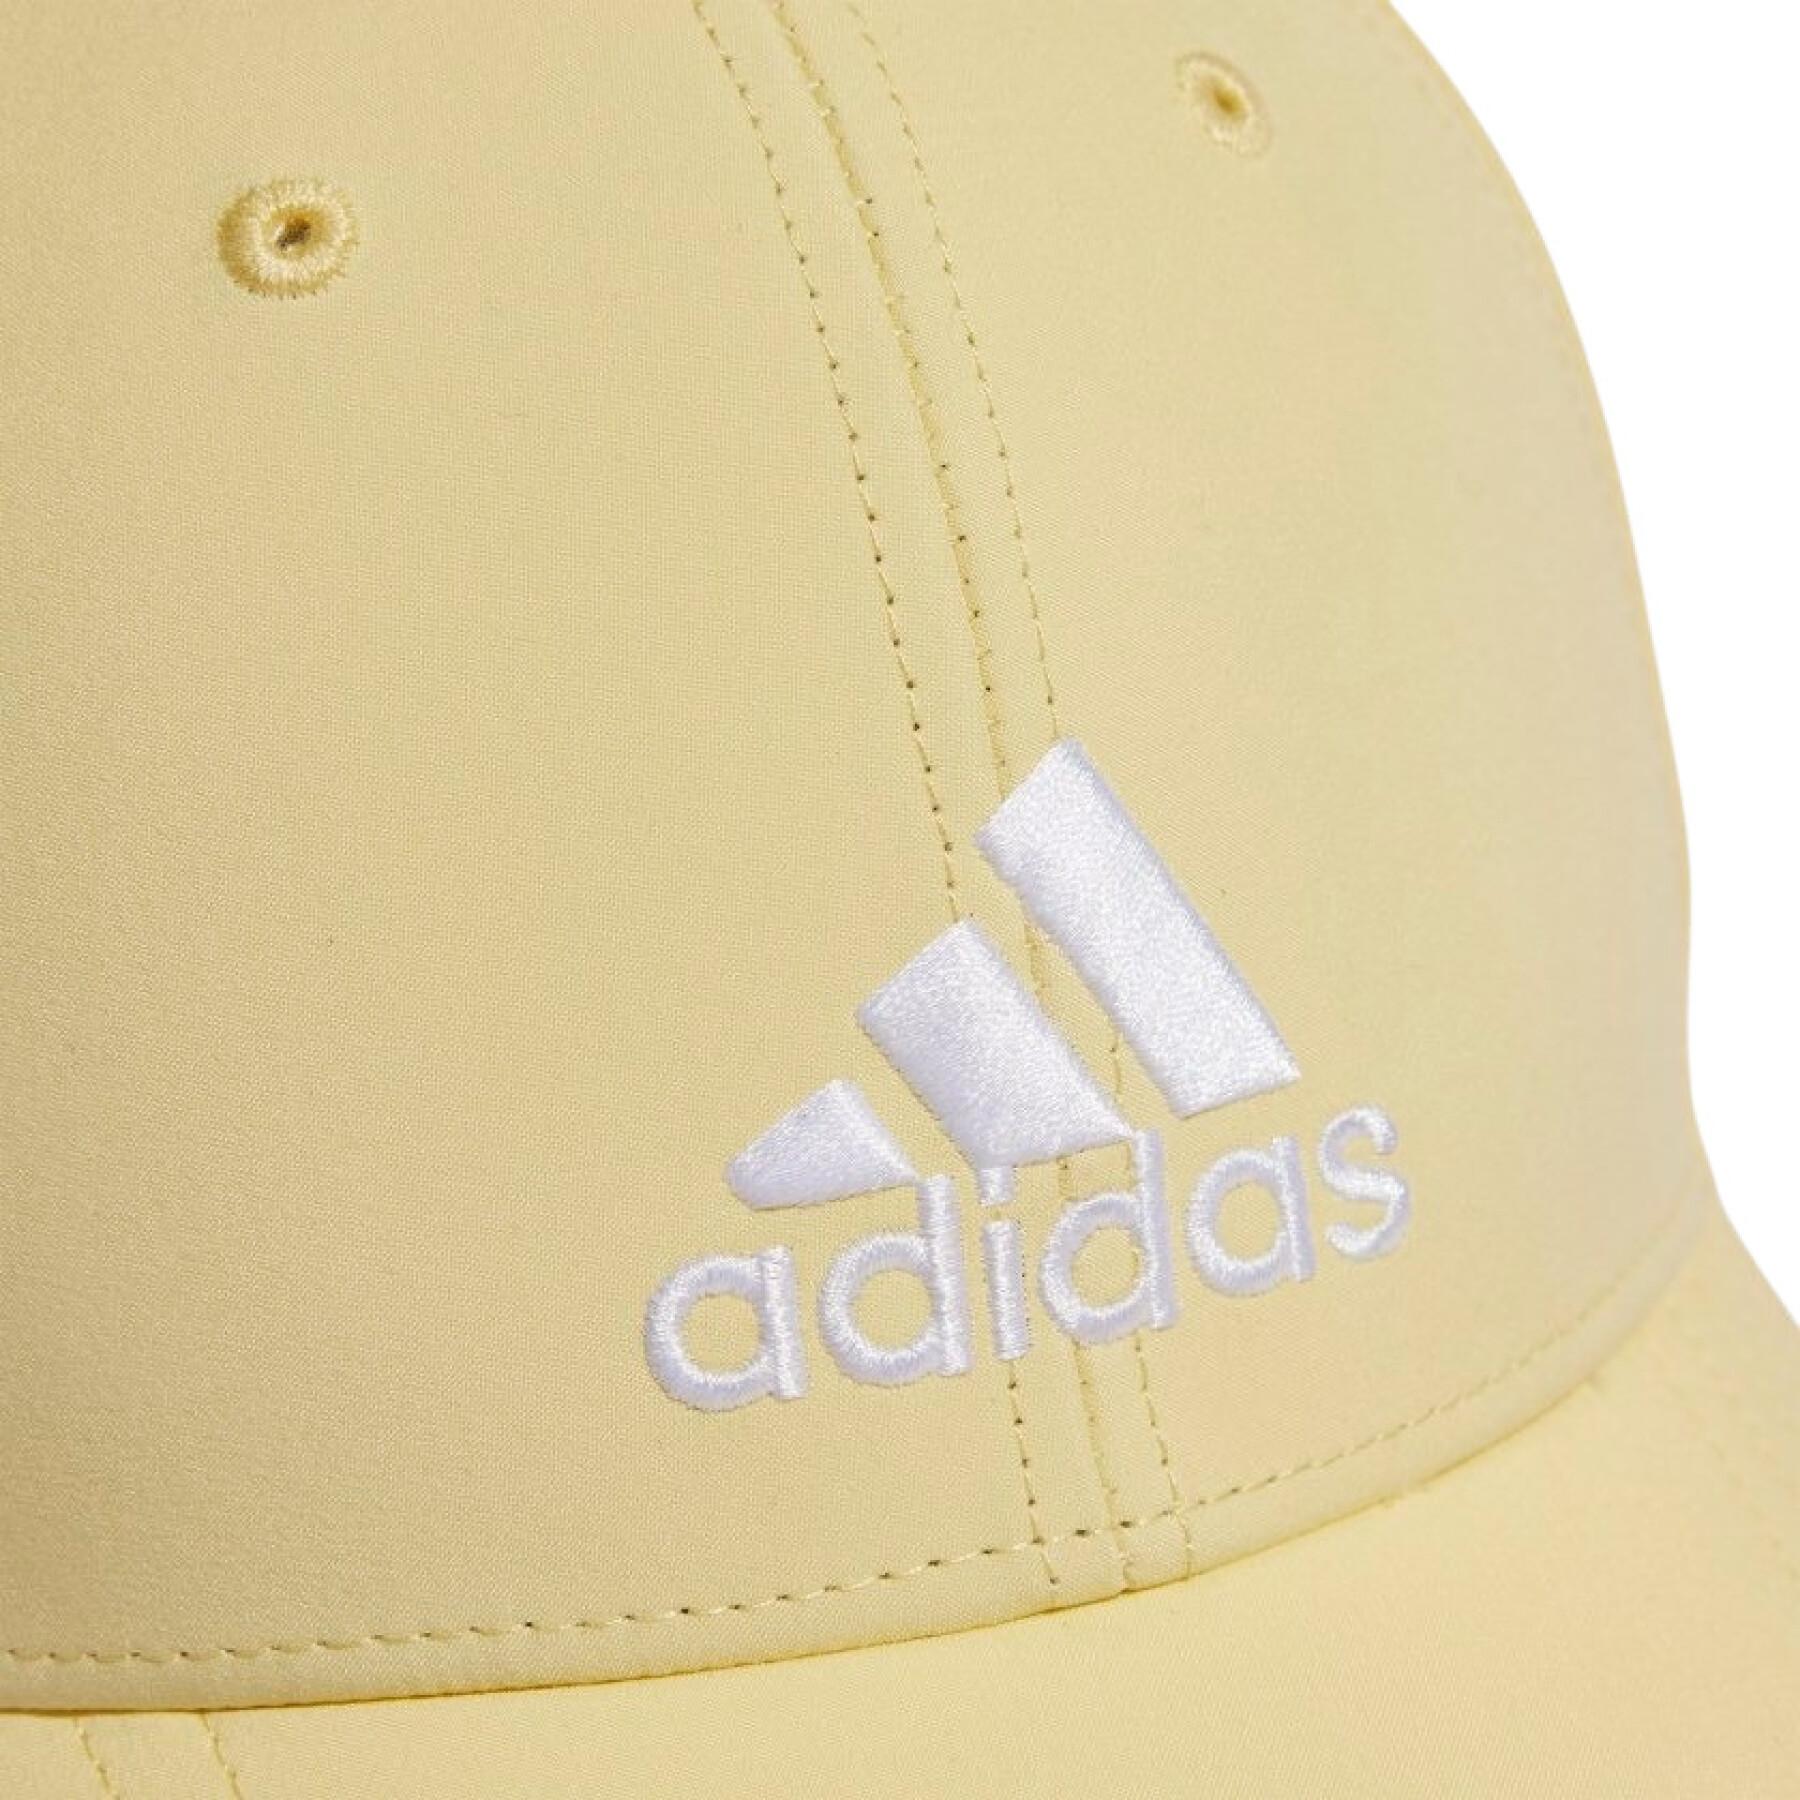 Lightweight embroidered baseball cap adidas